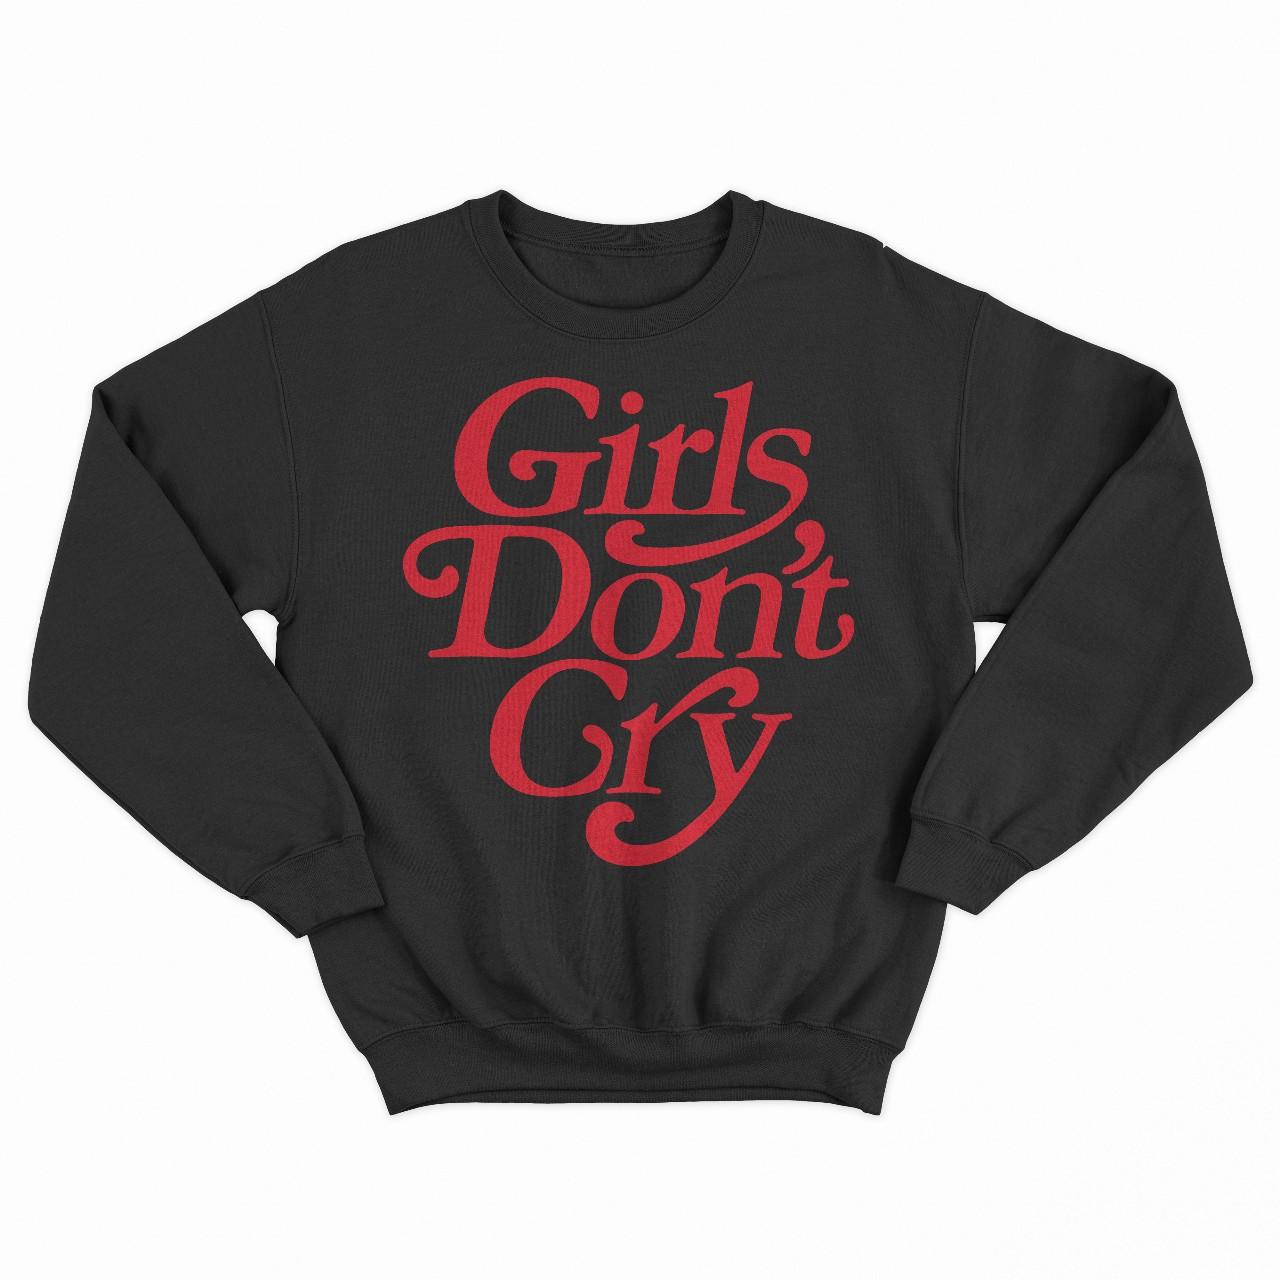 Girls don't cry sweatshirt. Hanes Unisex Crew Neck... - Depop